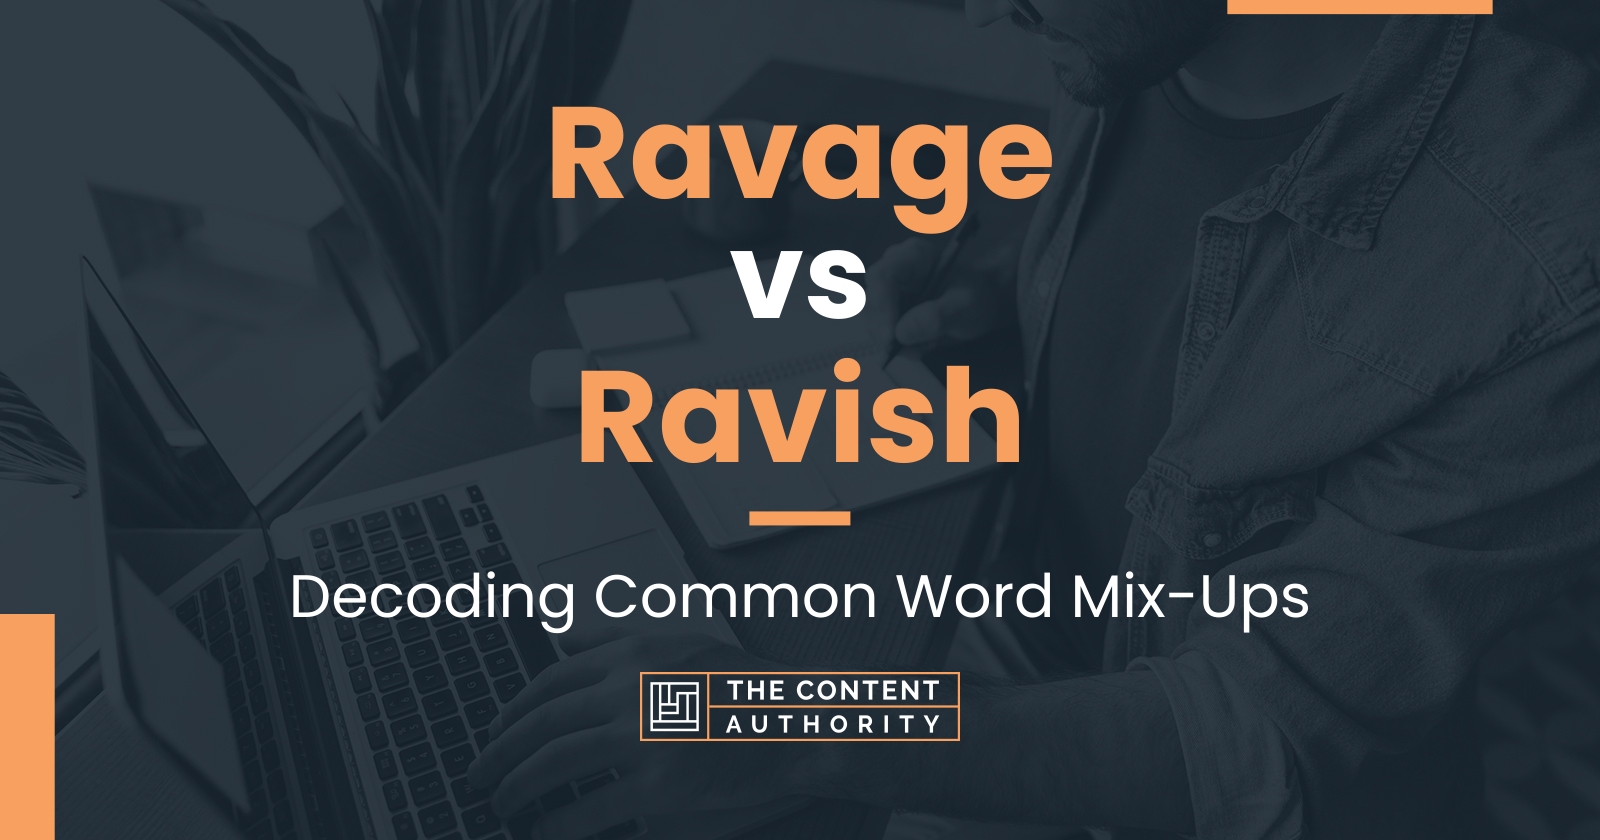 Ravage vs Ravish: Decoding Common Word Mix-Ups